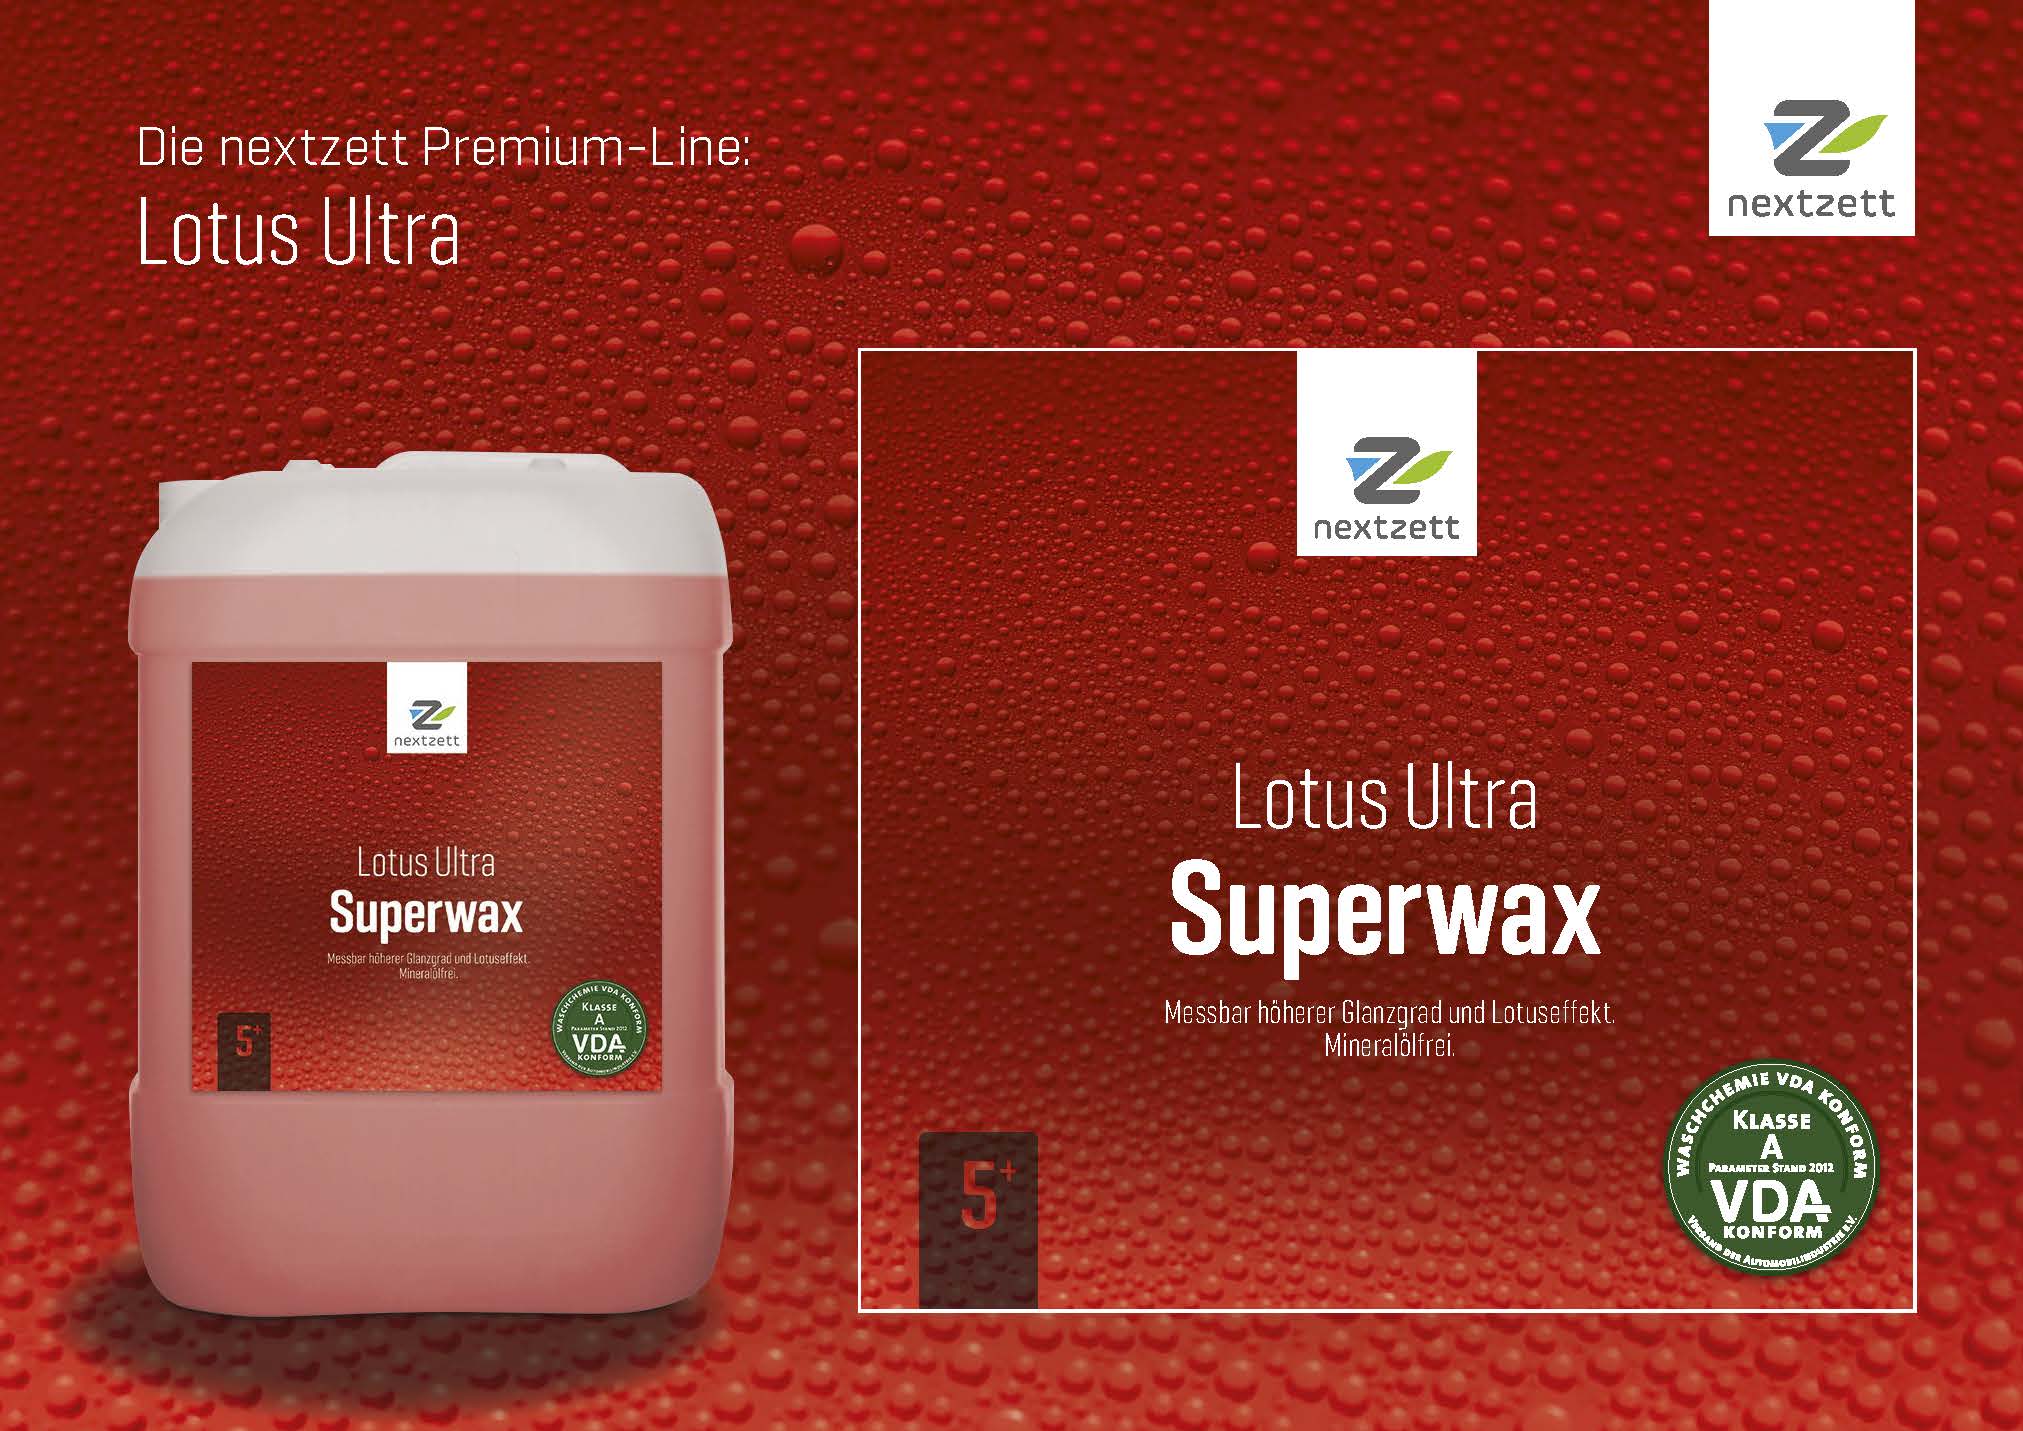 Nextzett Lotus Ultra Superwax - Flyer